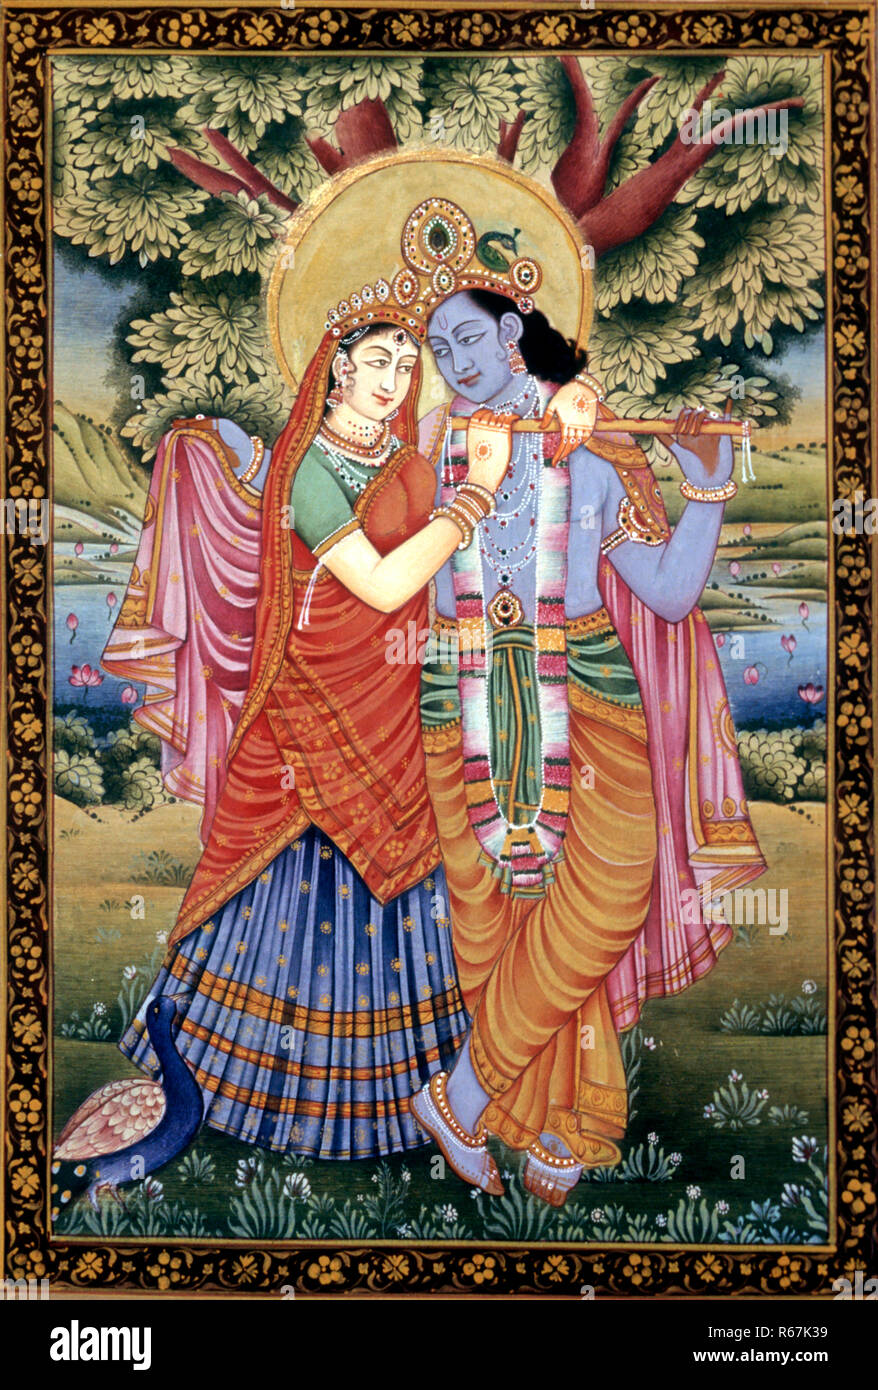 Radha und Krishna liebe Szene Miniaturmalerei auf Papier Stockfoto